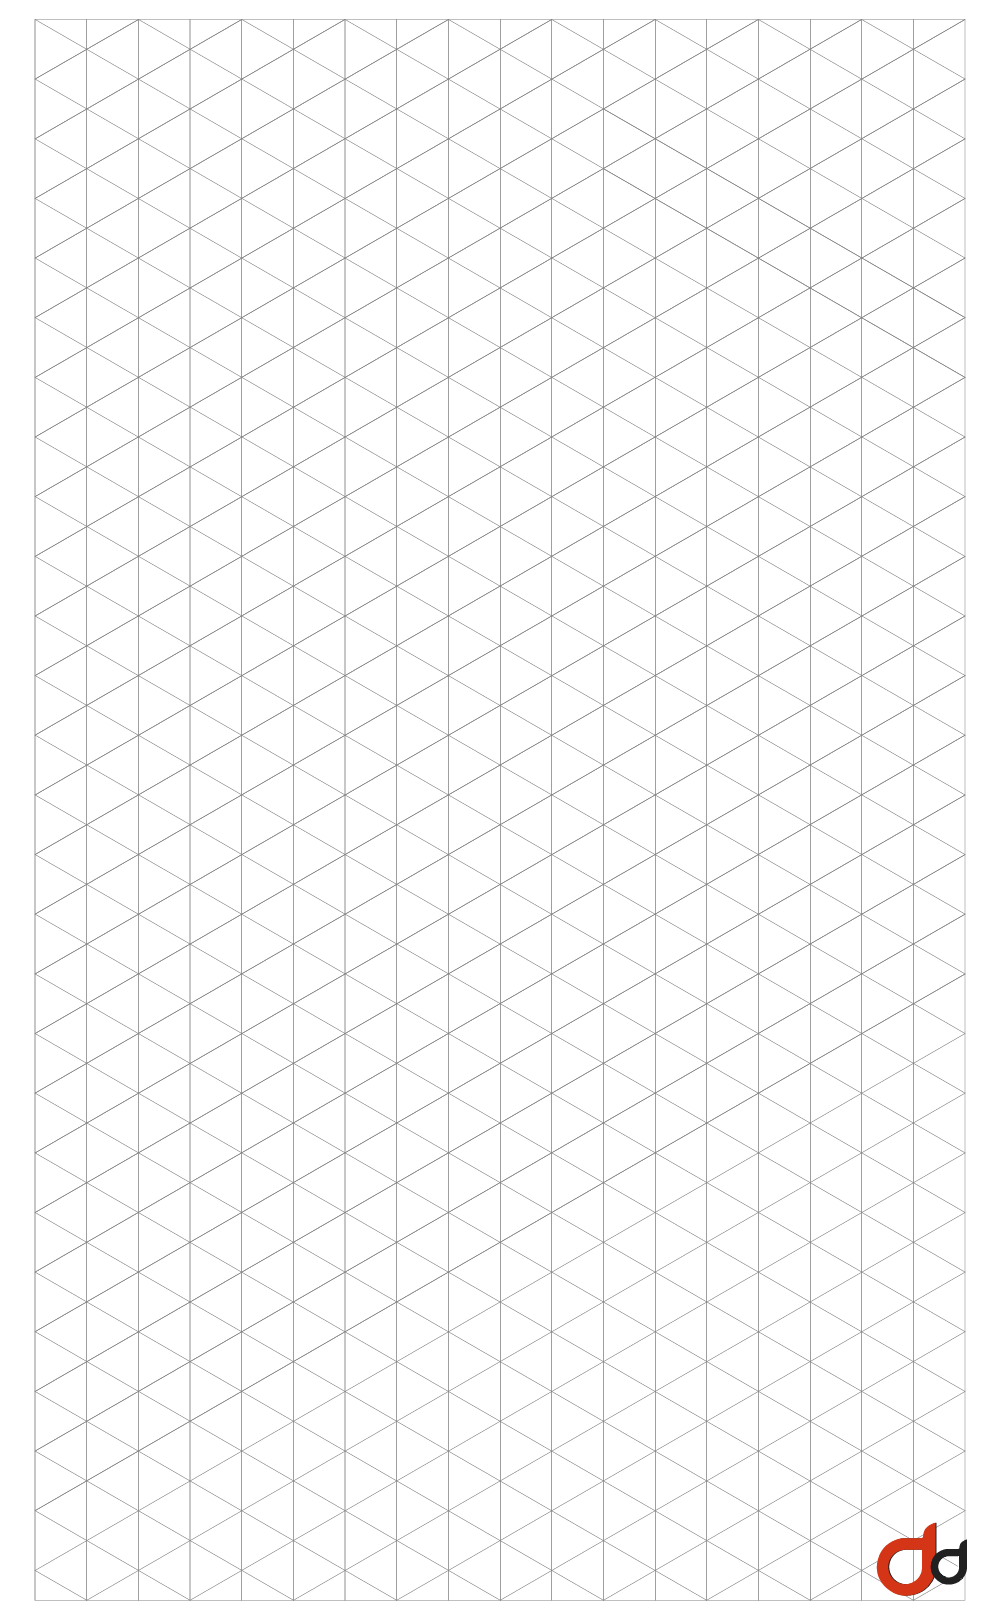 Triangular grid pattern